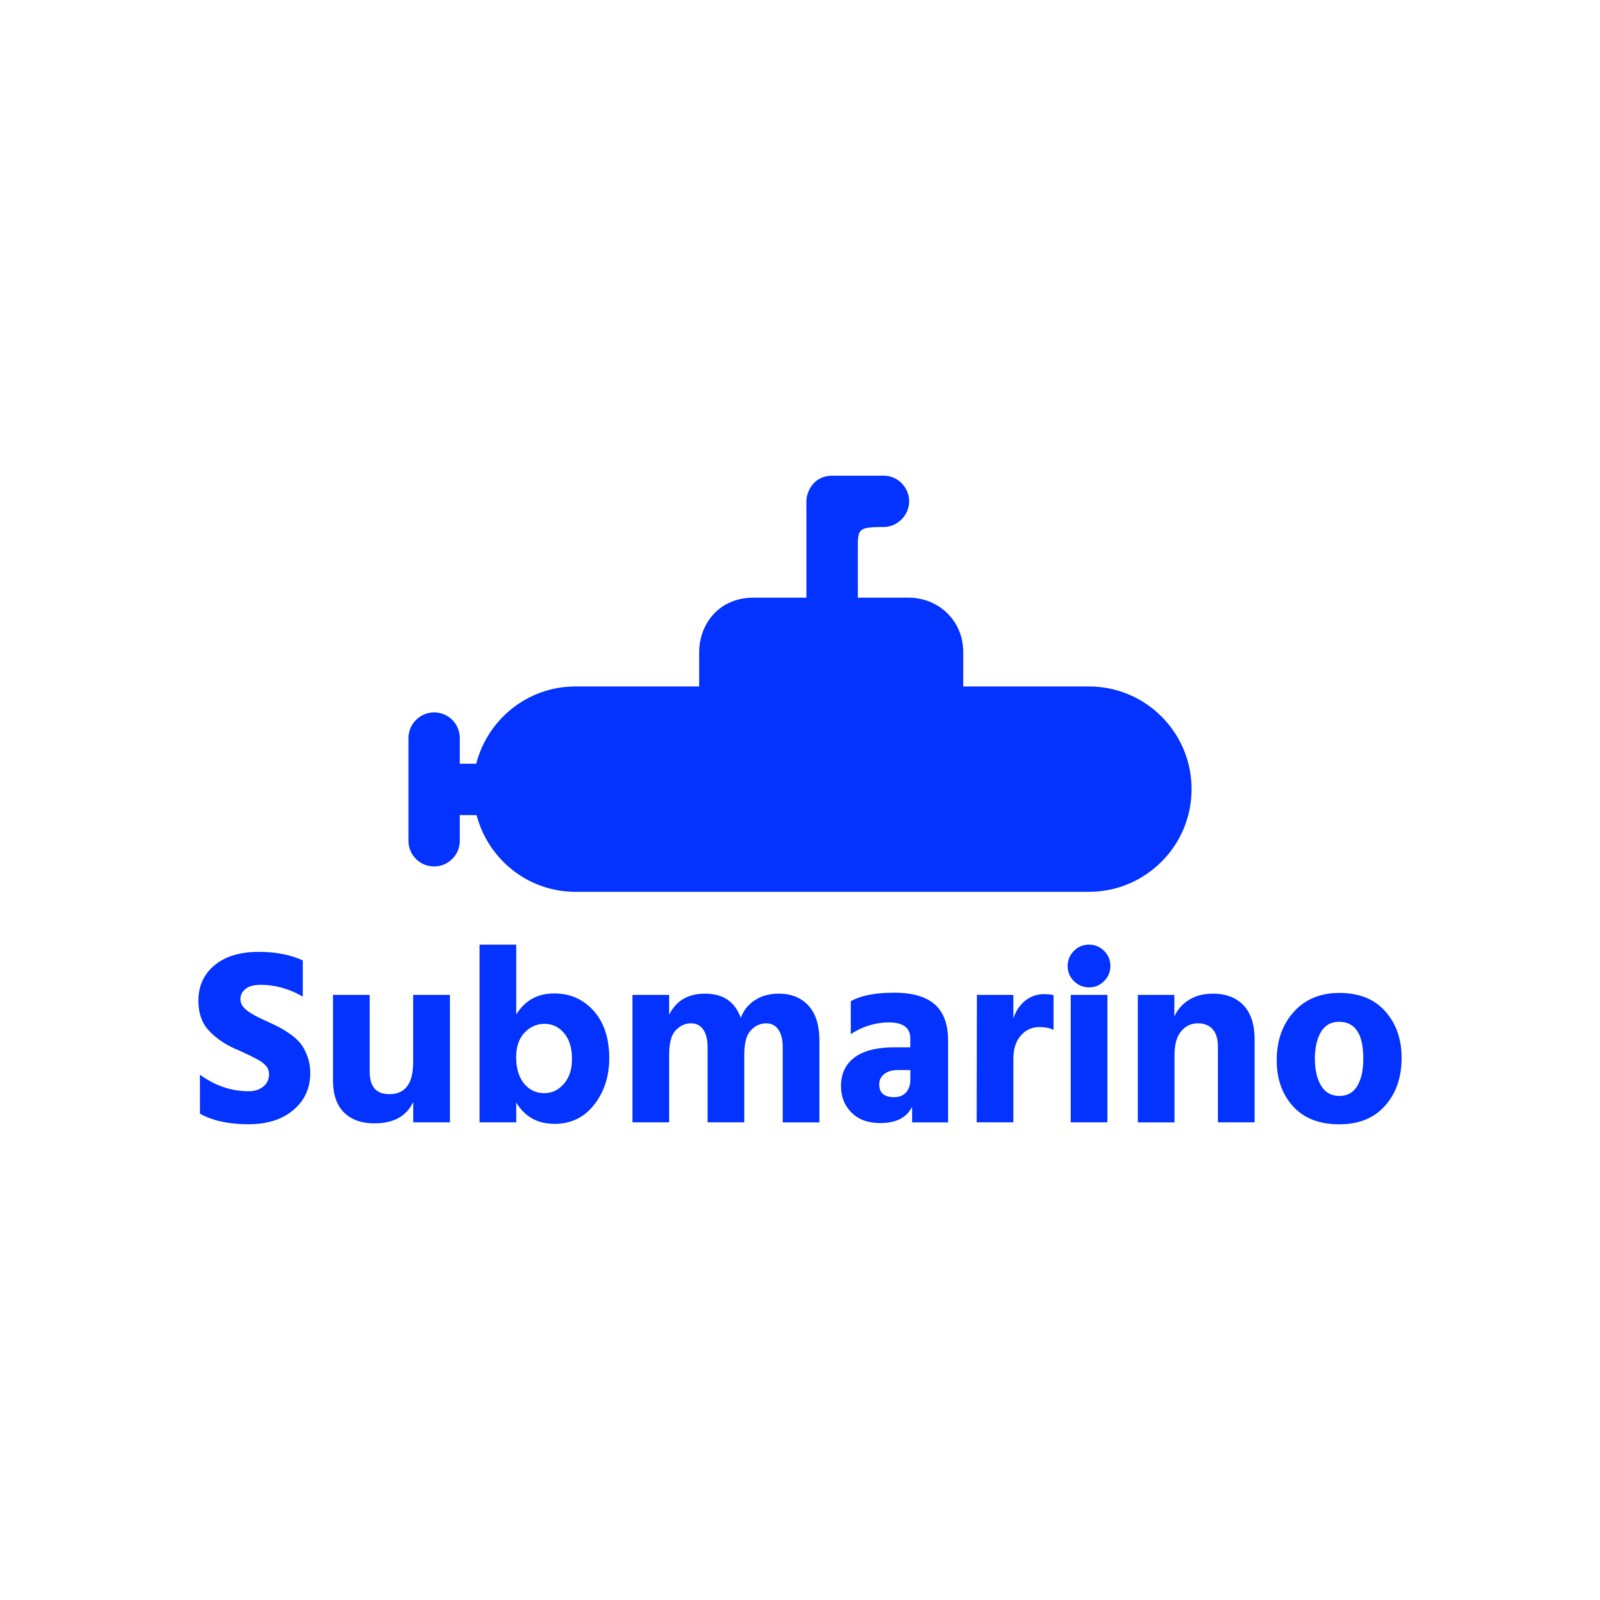 Submarino Logo